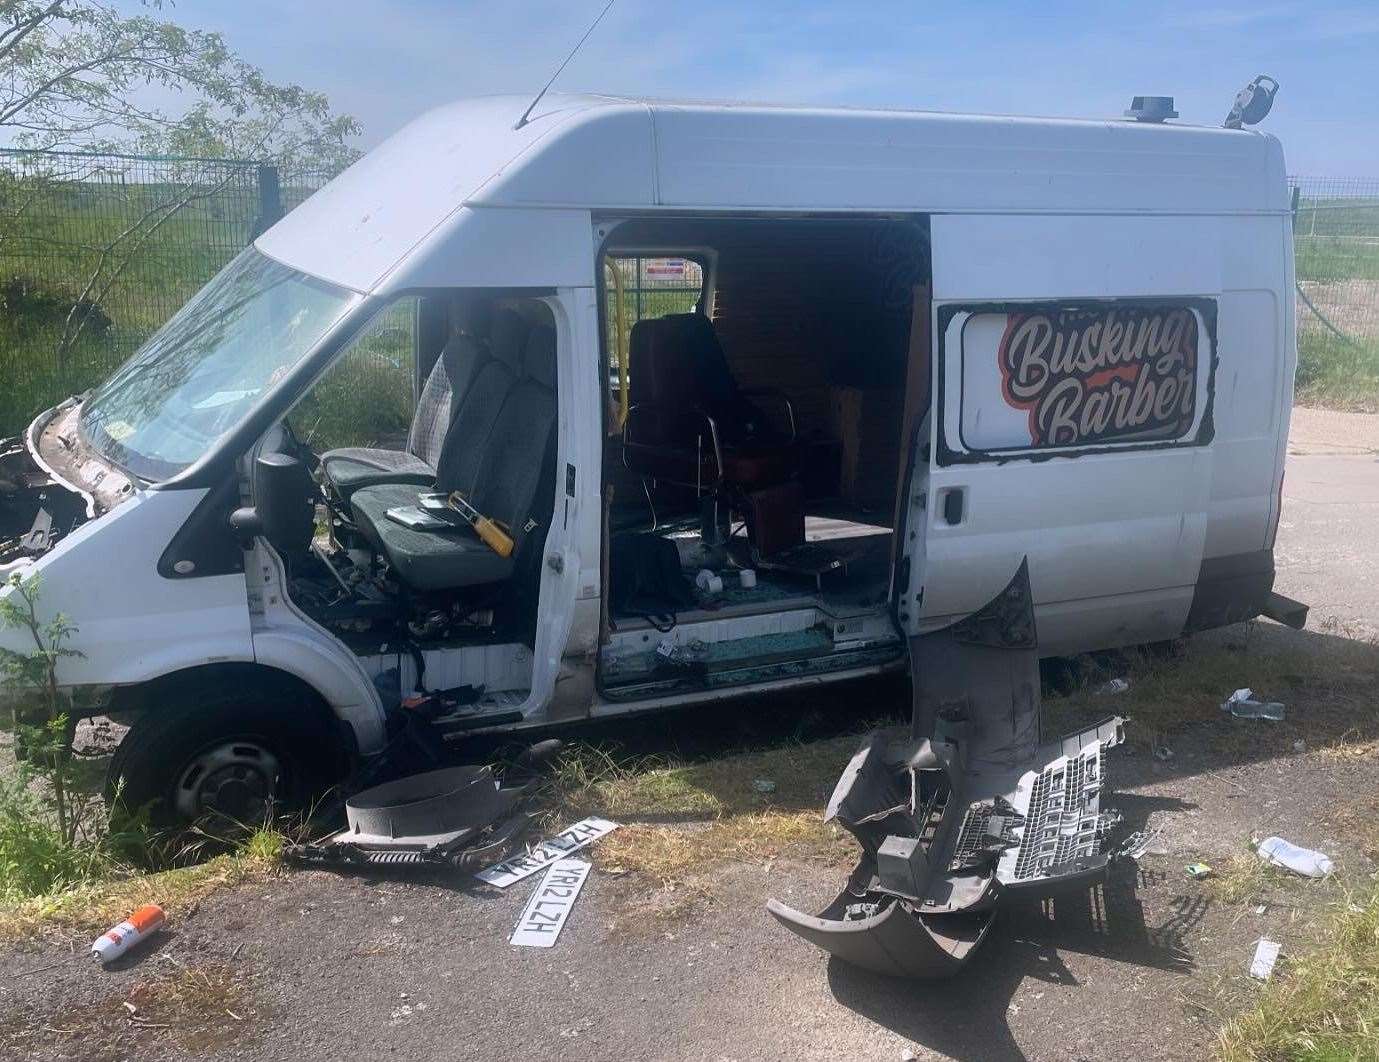 Damaged Busking Barber van was found in Queenborough. Picture: Aaron Simmons